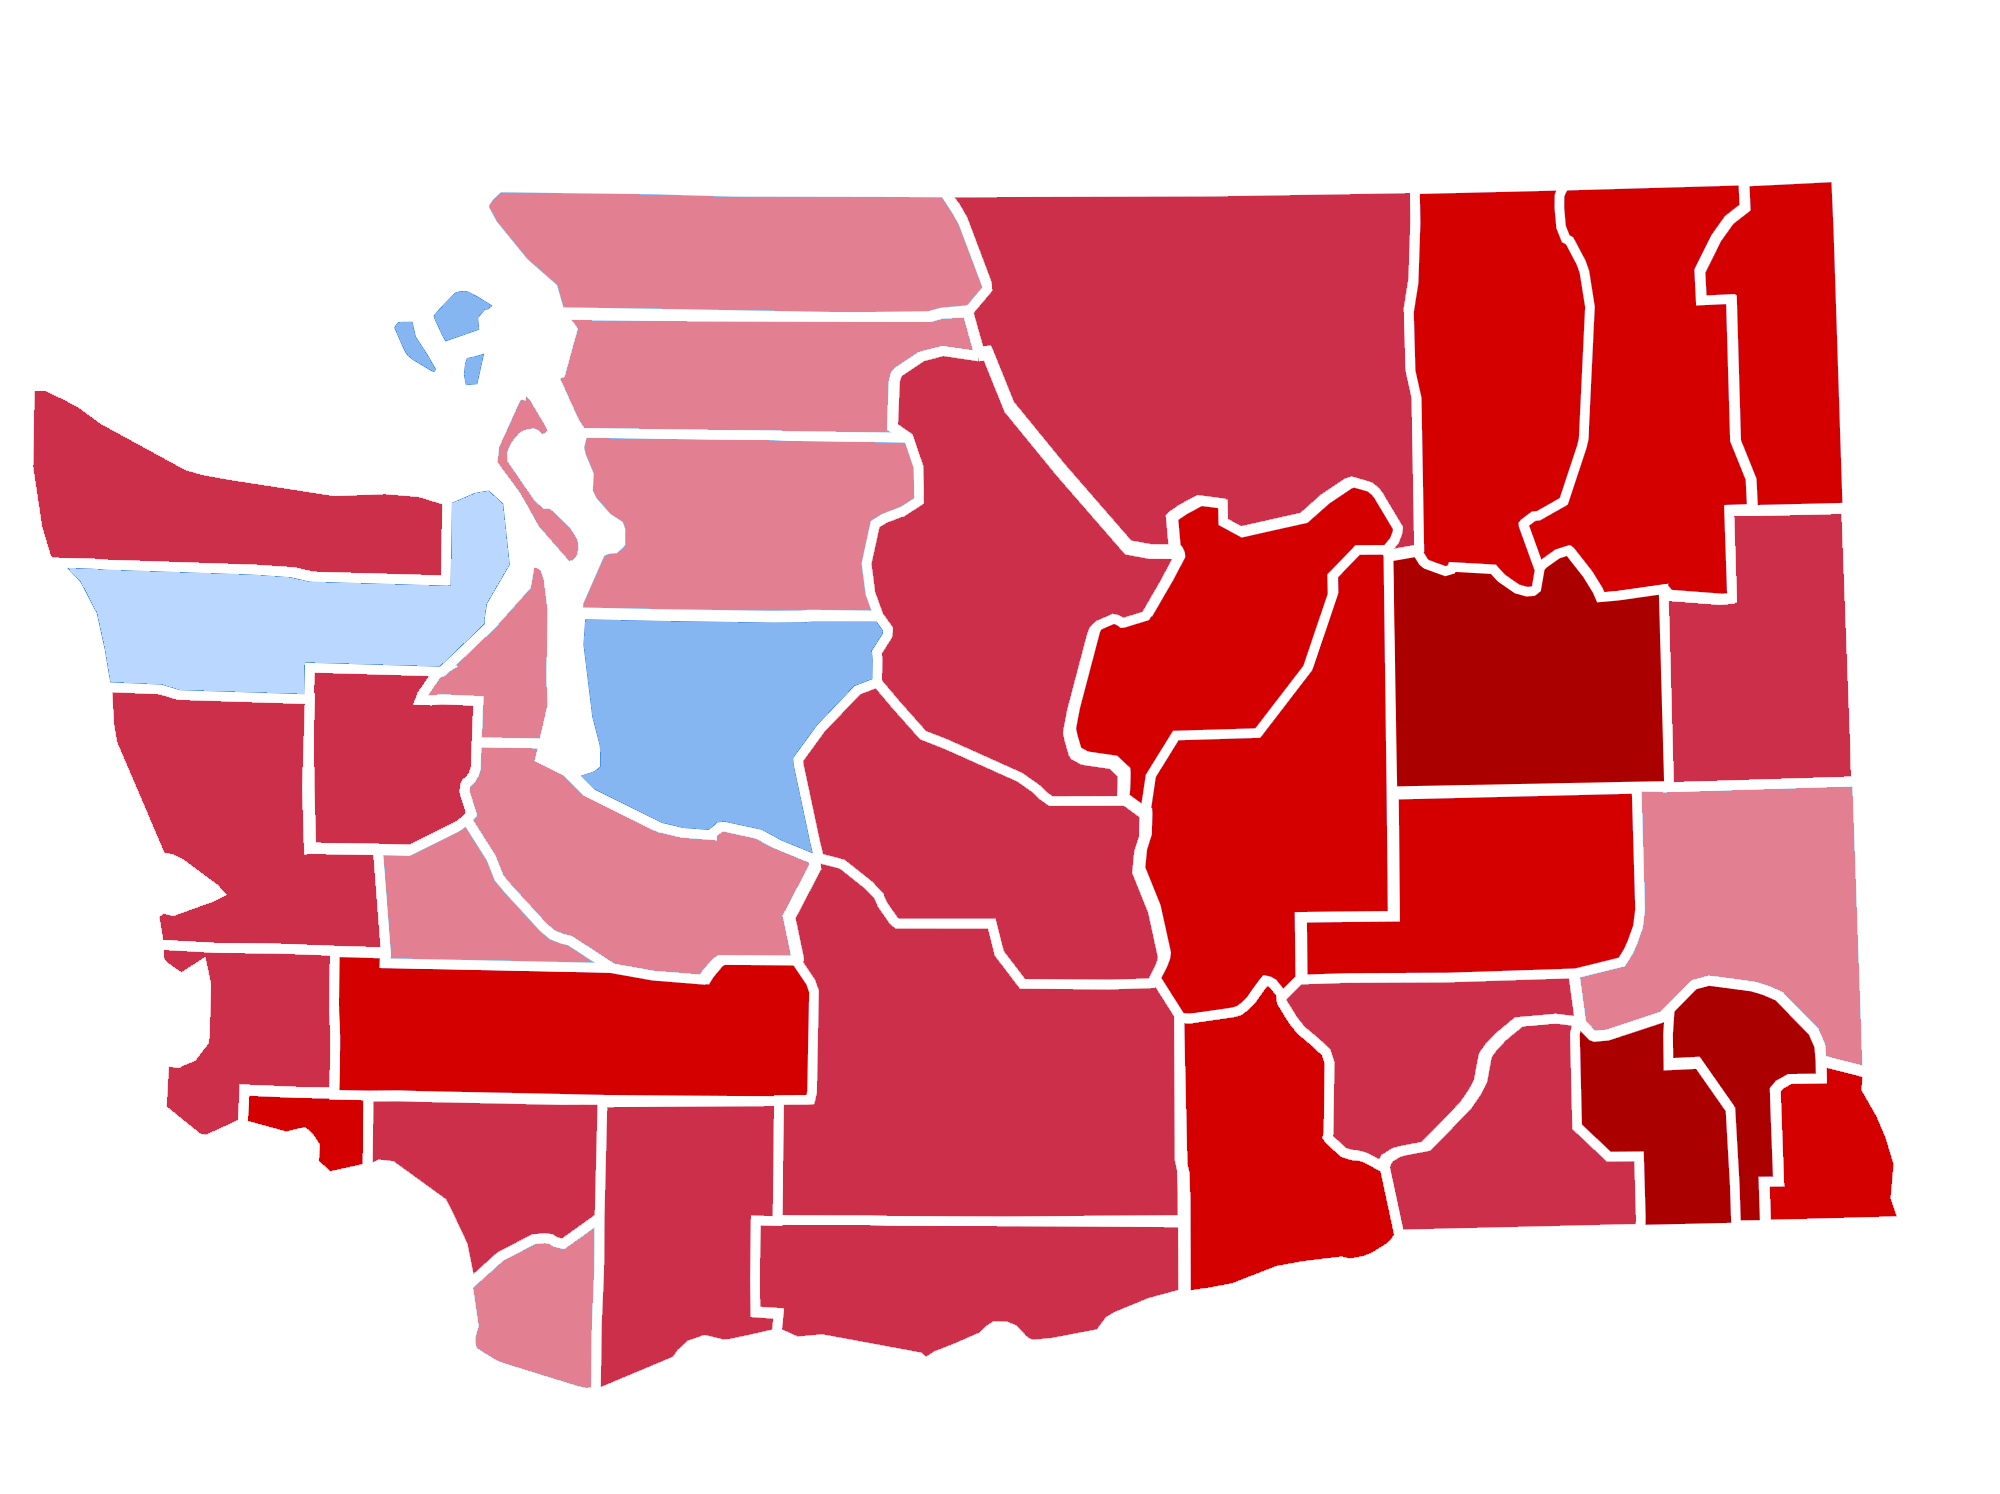 Washington_Presidential_Election_Results_2016_Republican_Landslide_15.06%.png